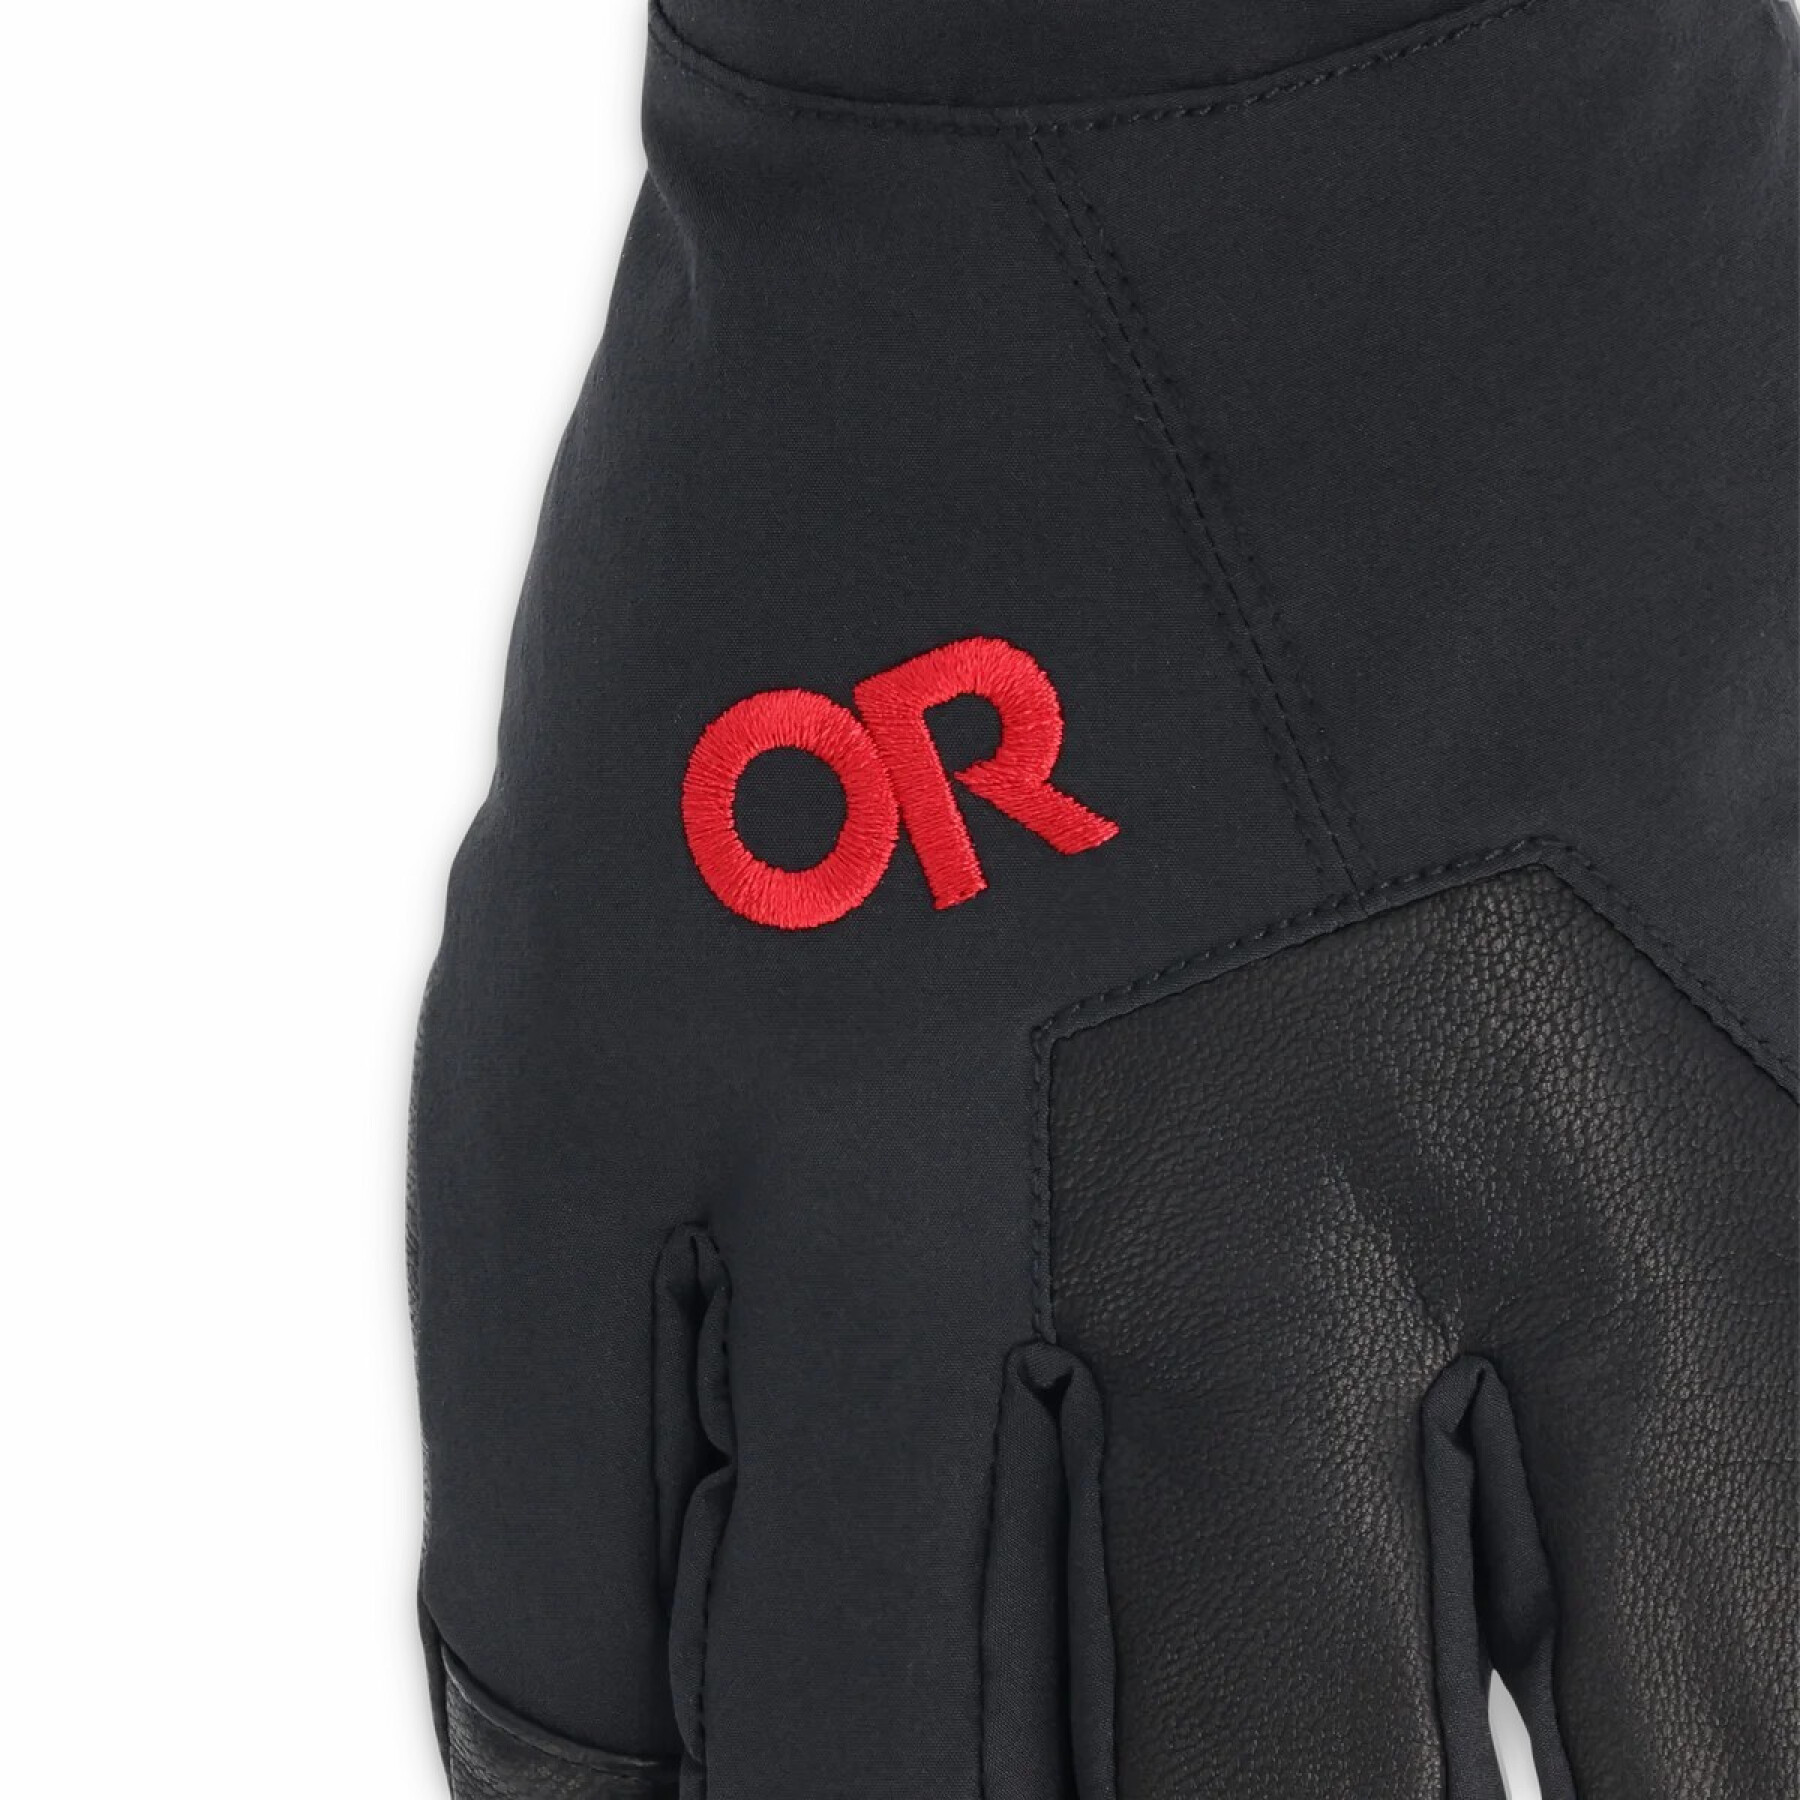 Women's gloves Outdoor Research Arete II Gore-Tex